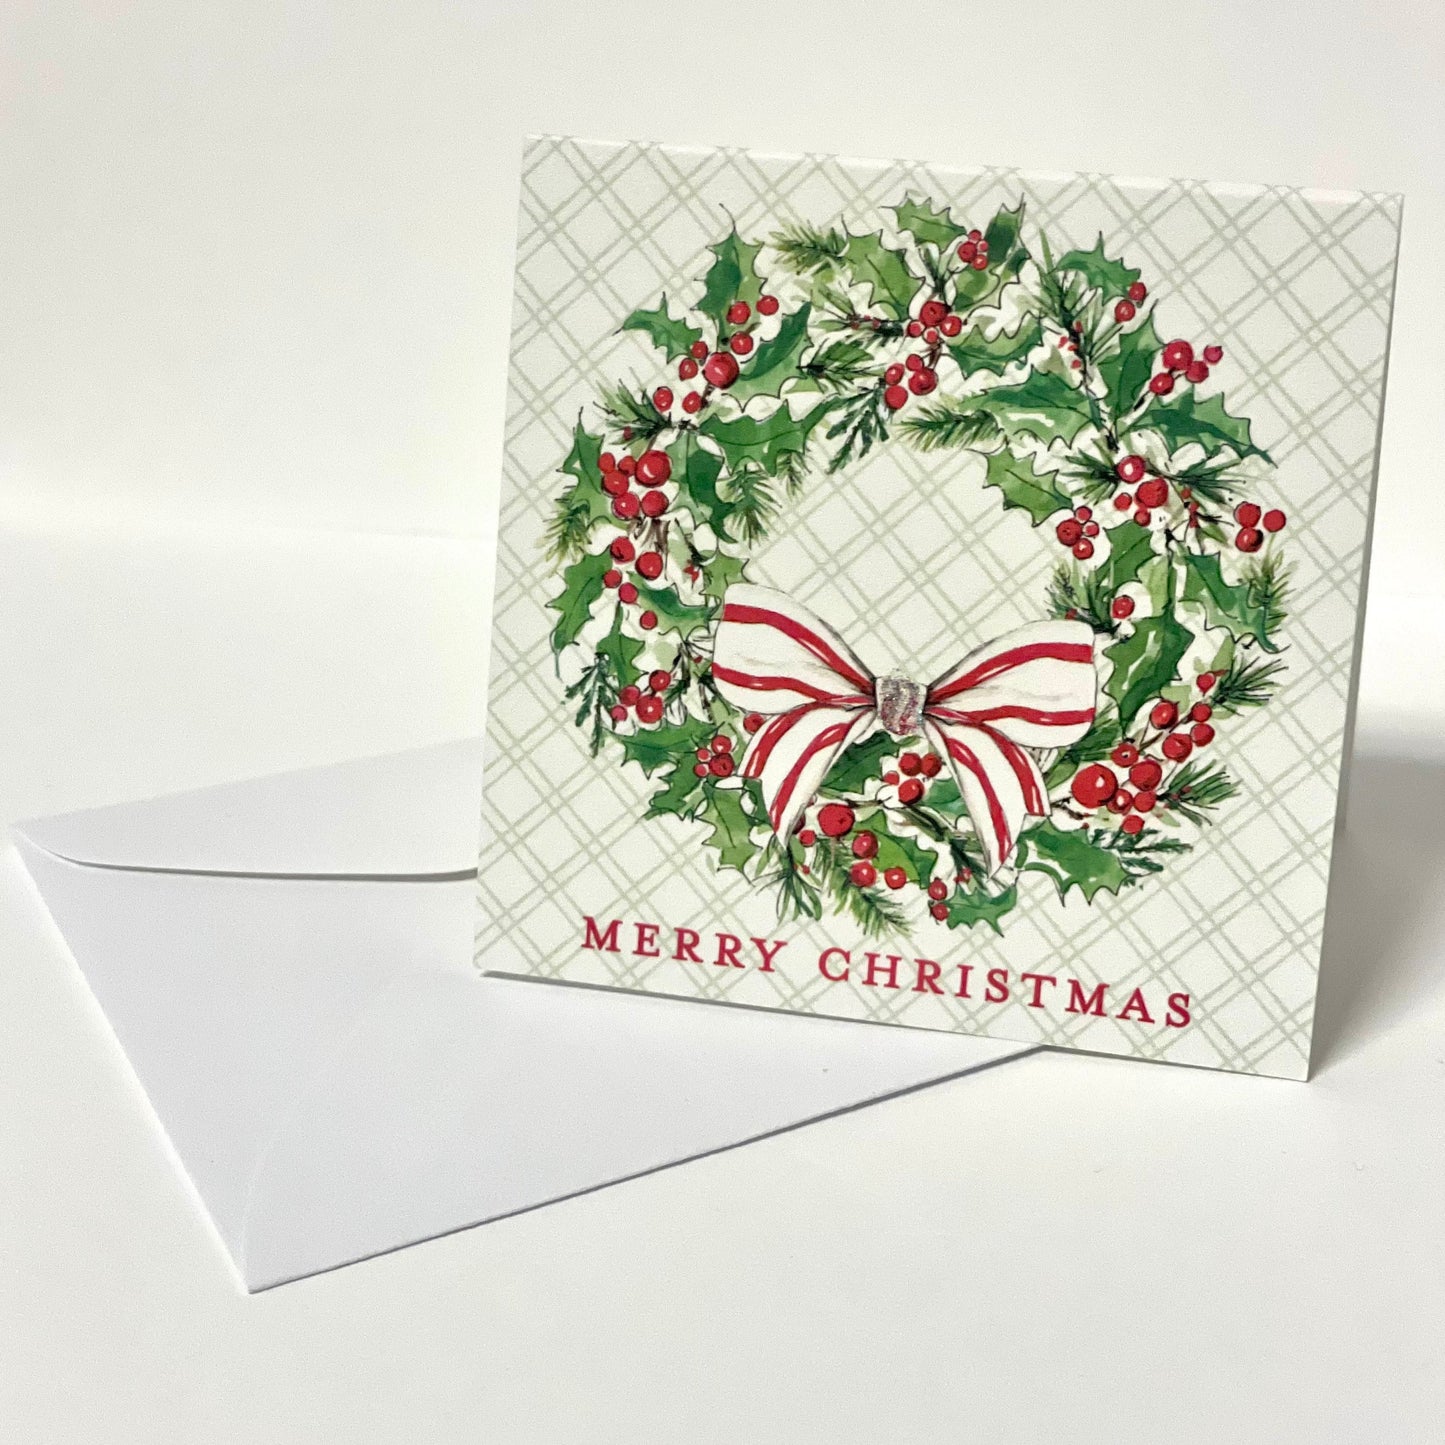 Mini merry Christmas card